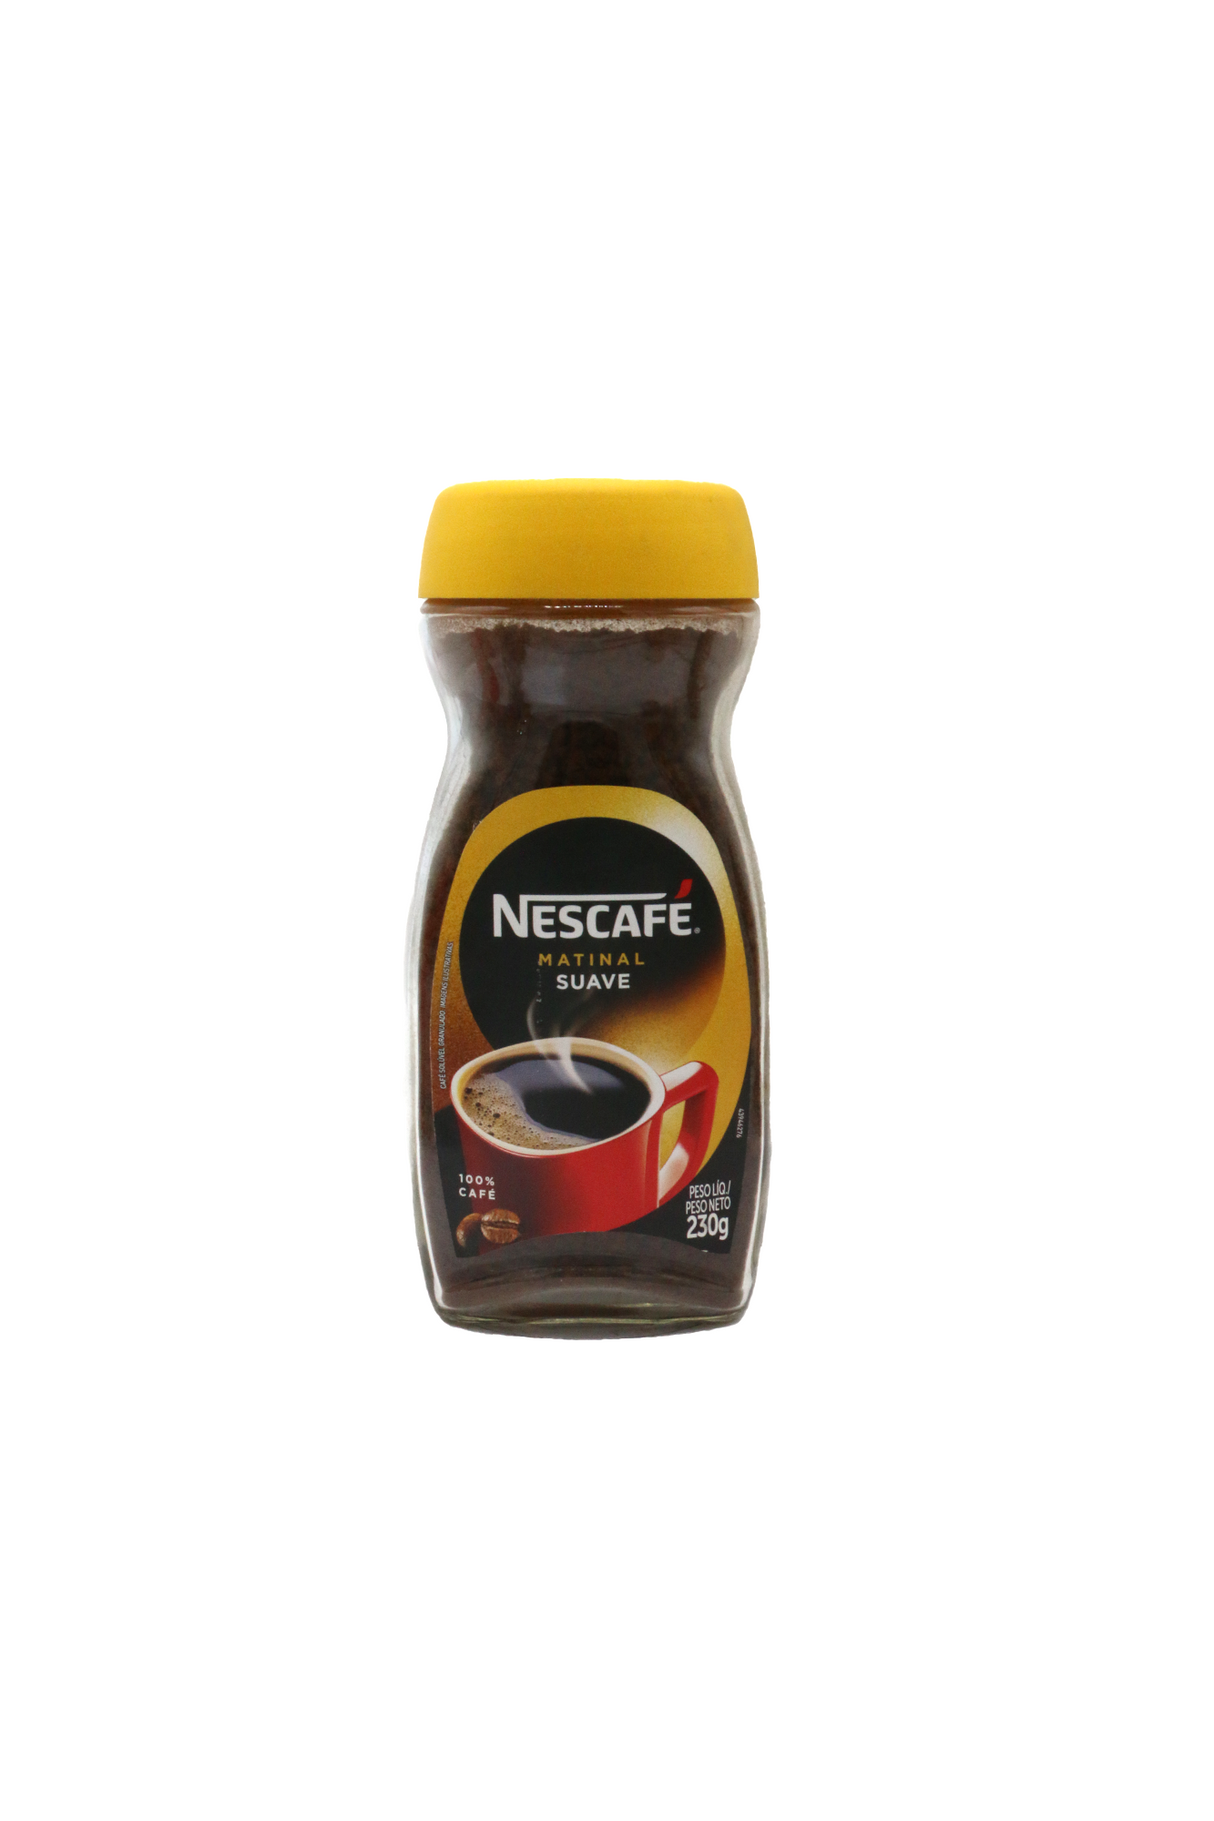 nescafe coffee matinal suave 230g